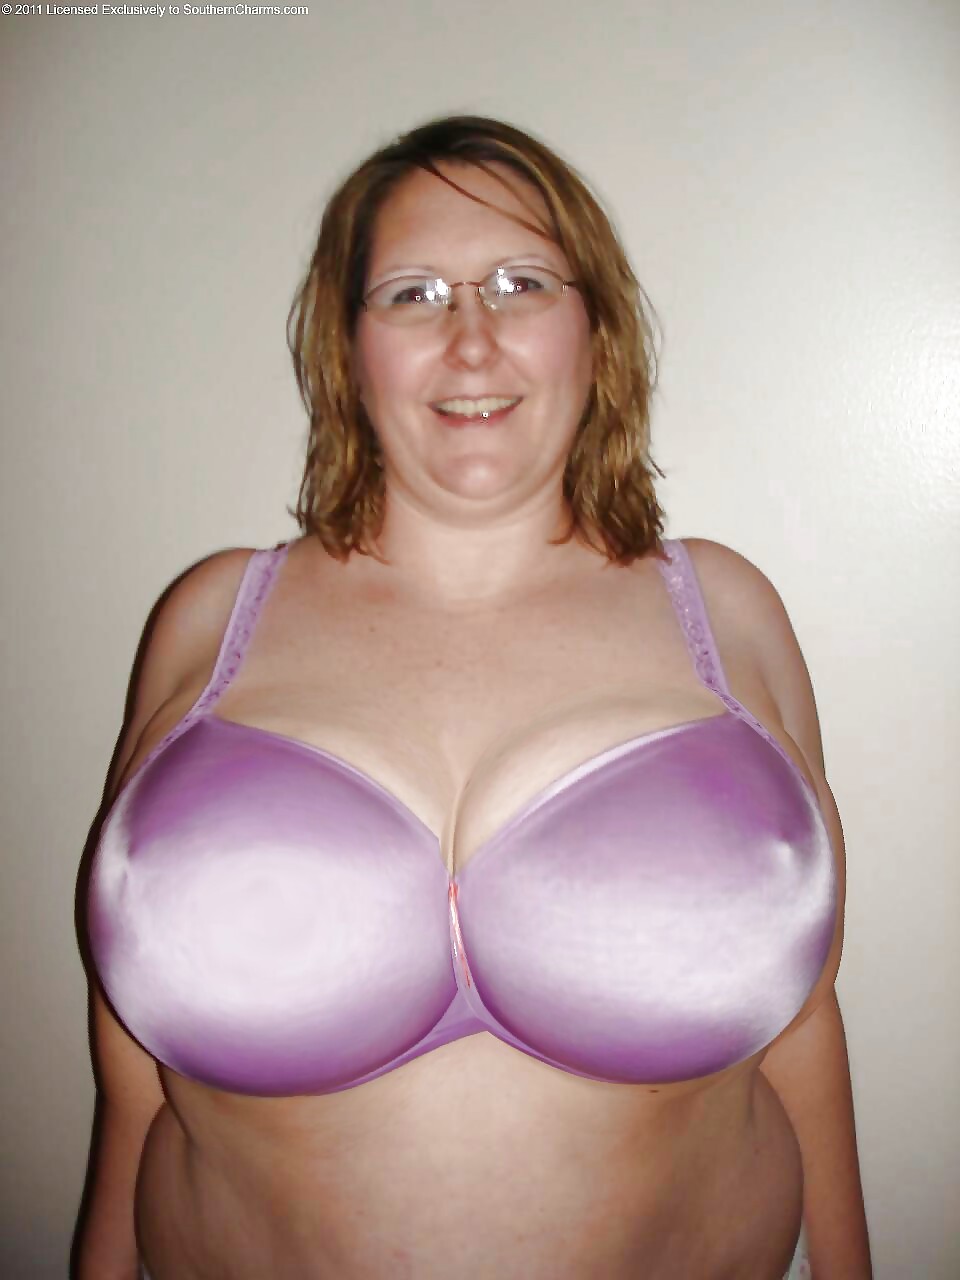 Breast jobs made bigger for more pleasure 2 #22559271